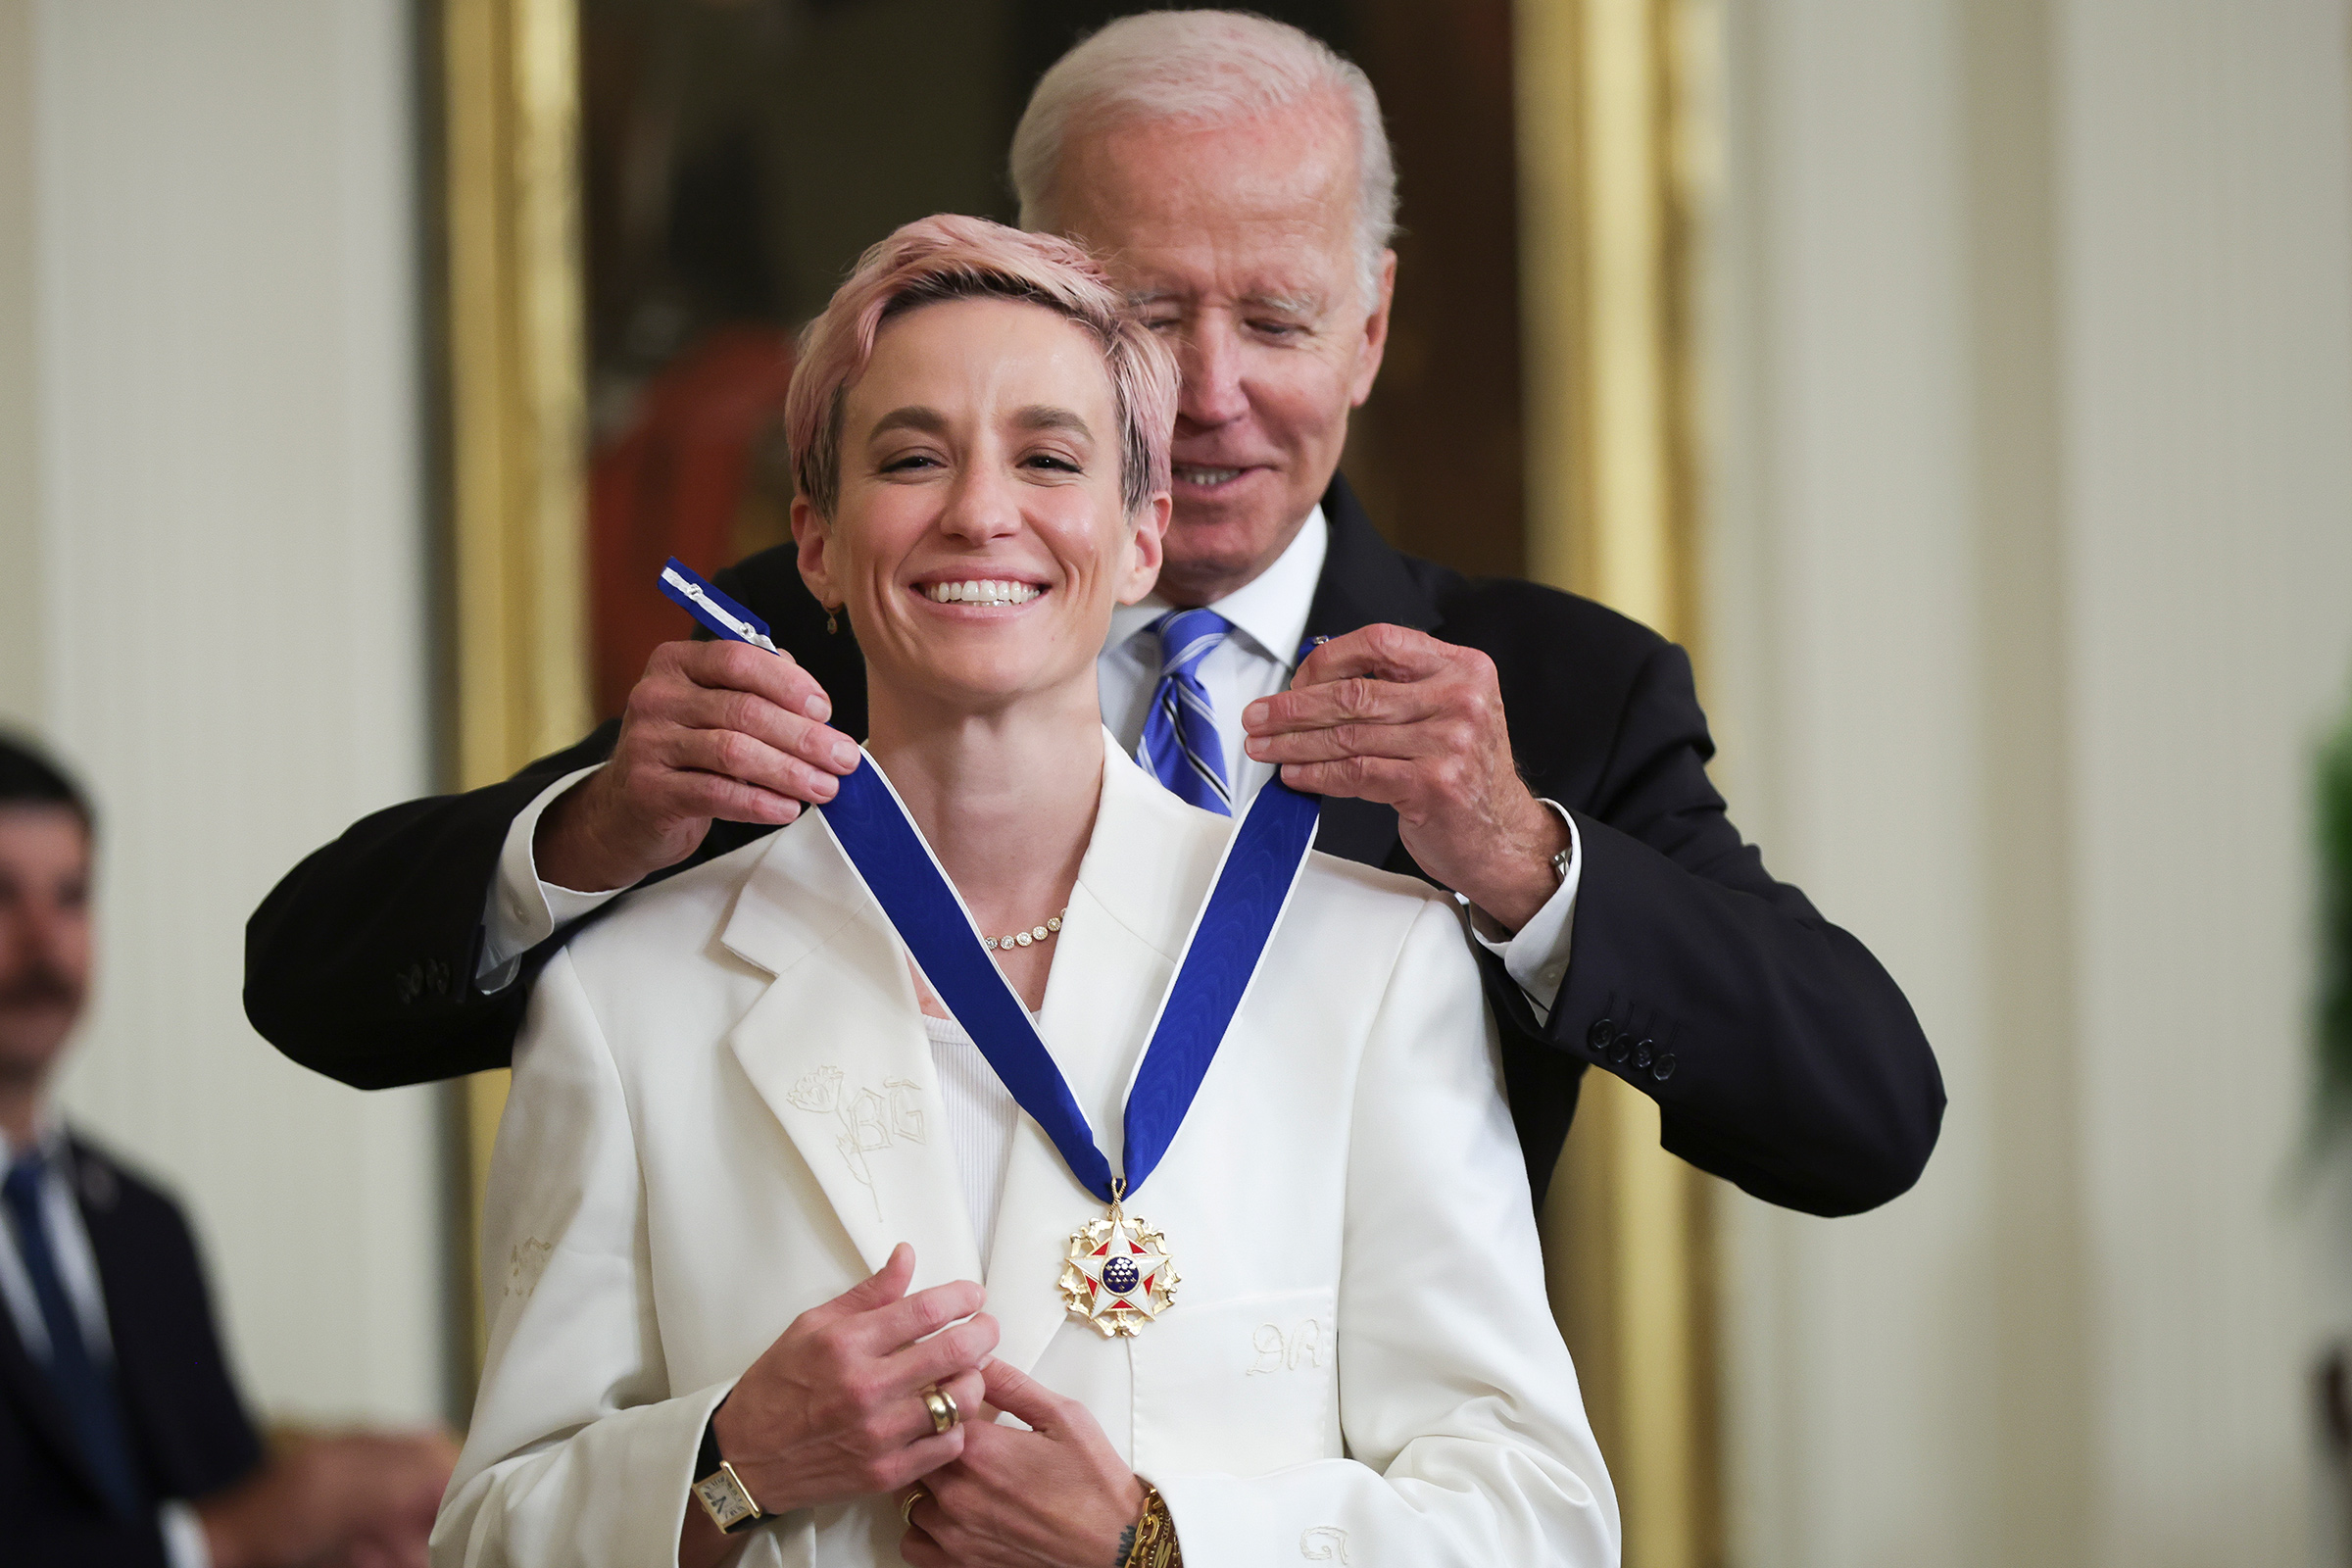 Megan Rapinoe receiving the medal of freedom from President biden